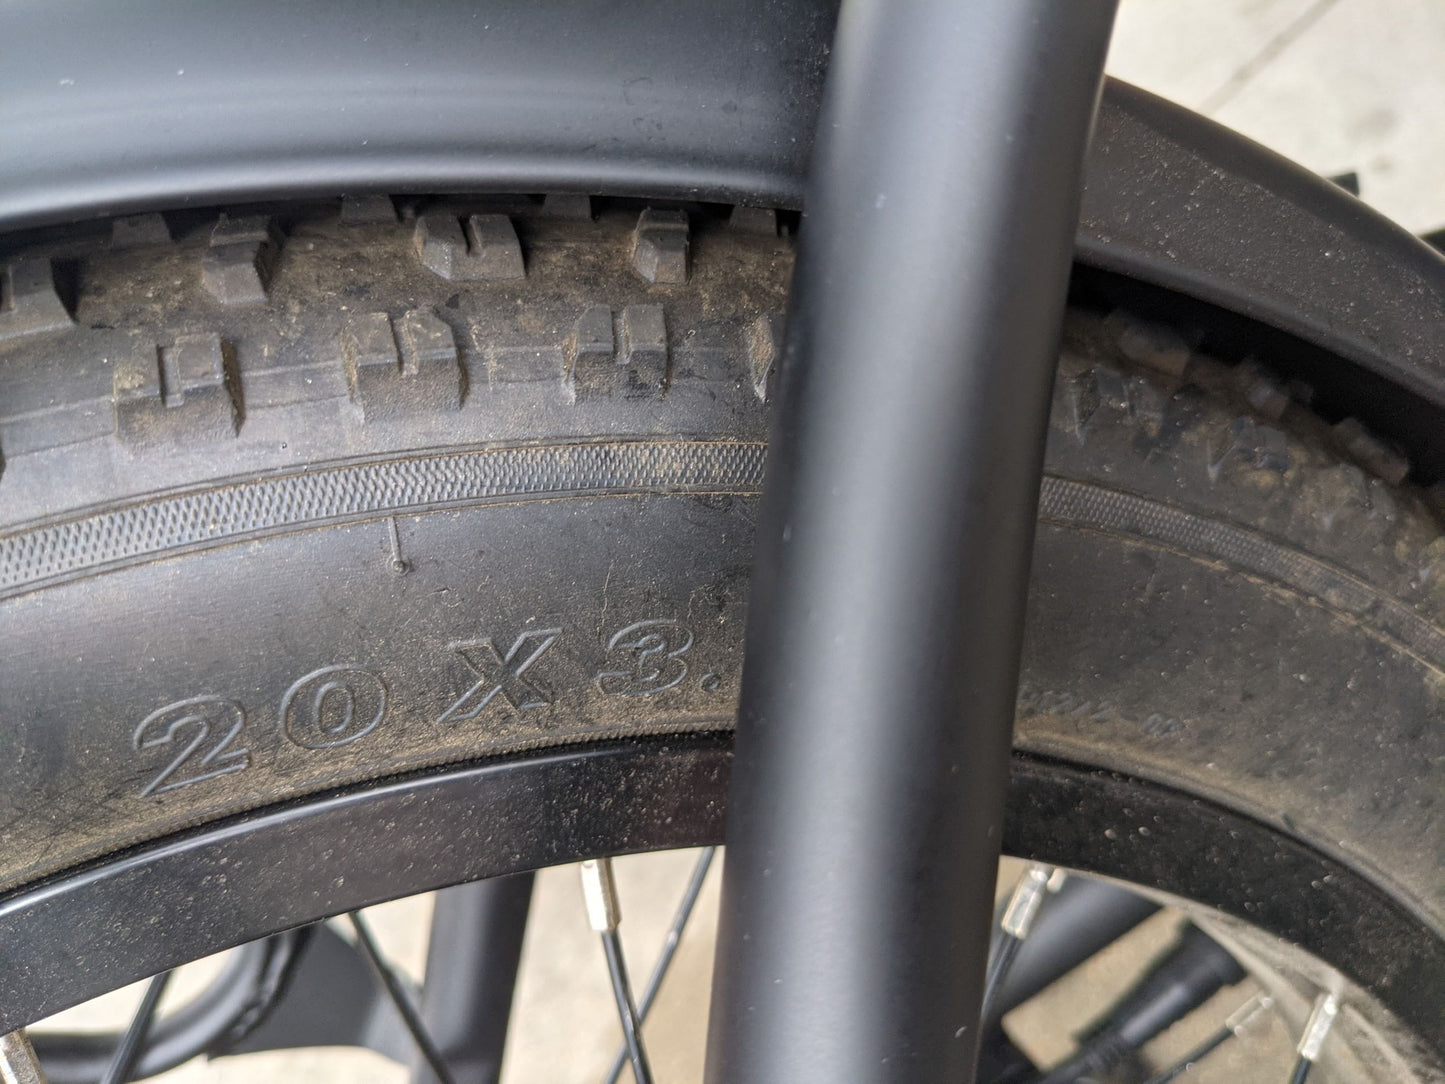 Retrospec Jax Rev EBikes Adult Folding E-Bike 750W 48 volt Fat Tire